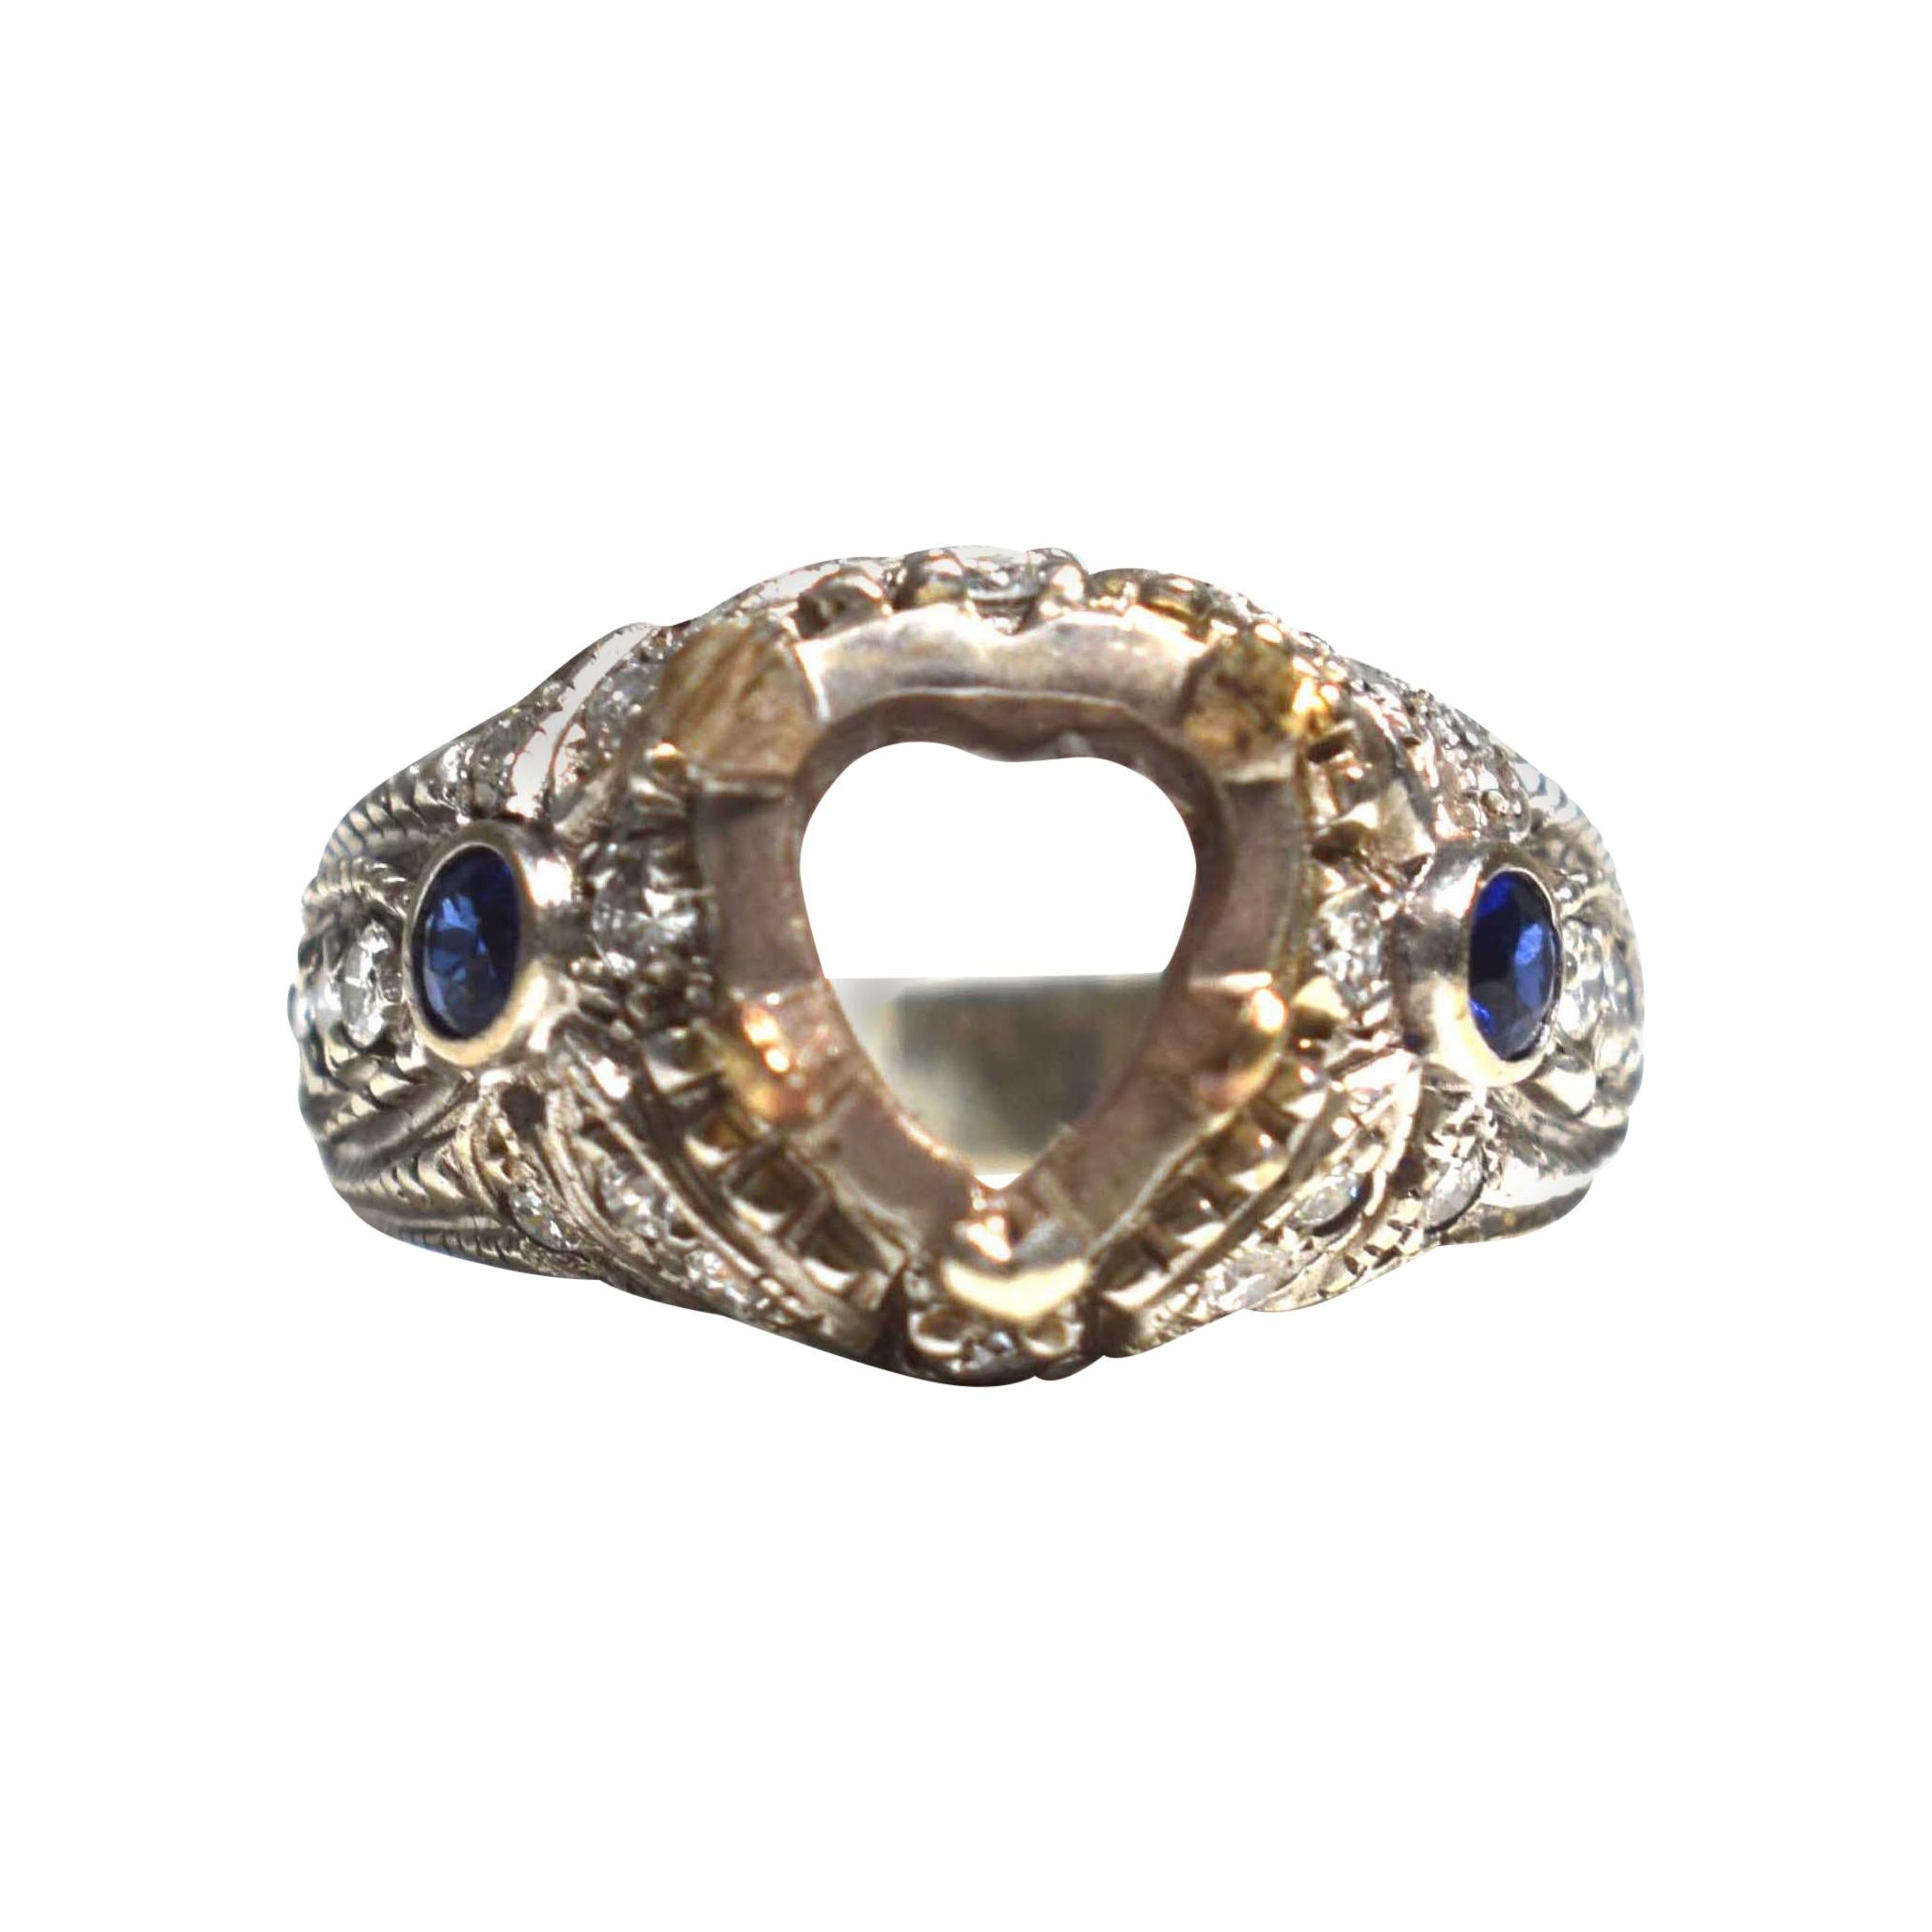 Antique Art Nouveau Heart-Shaped Diamond and Sapphire Ring Setting